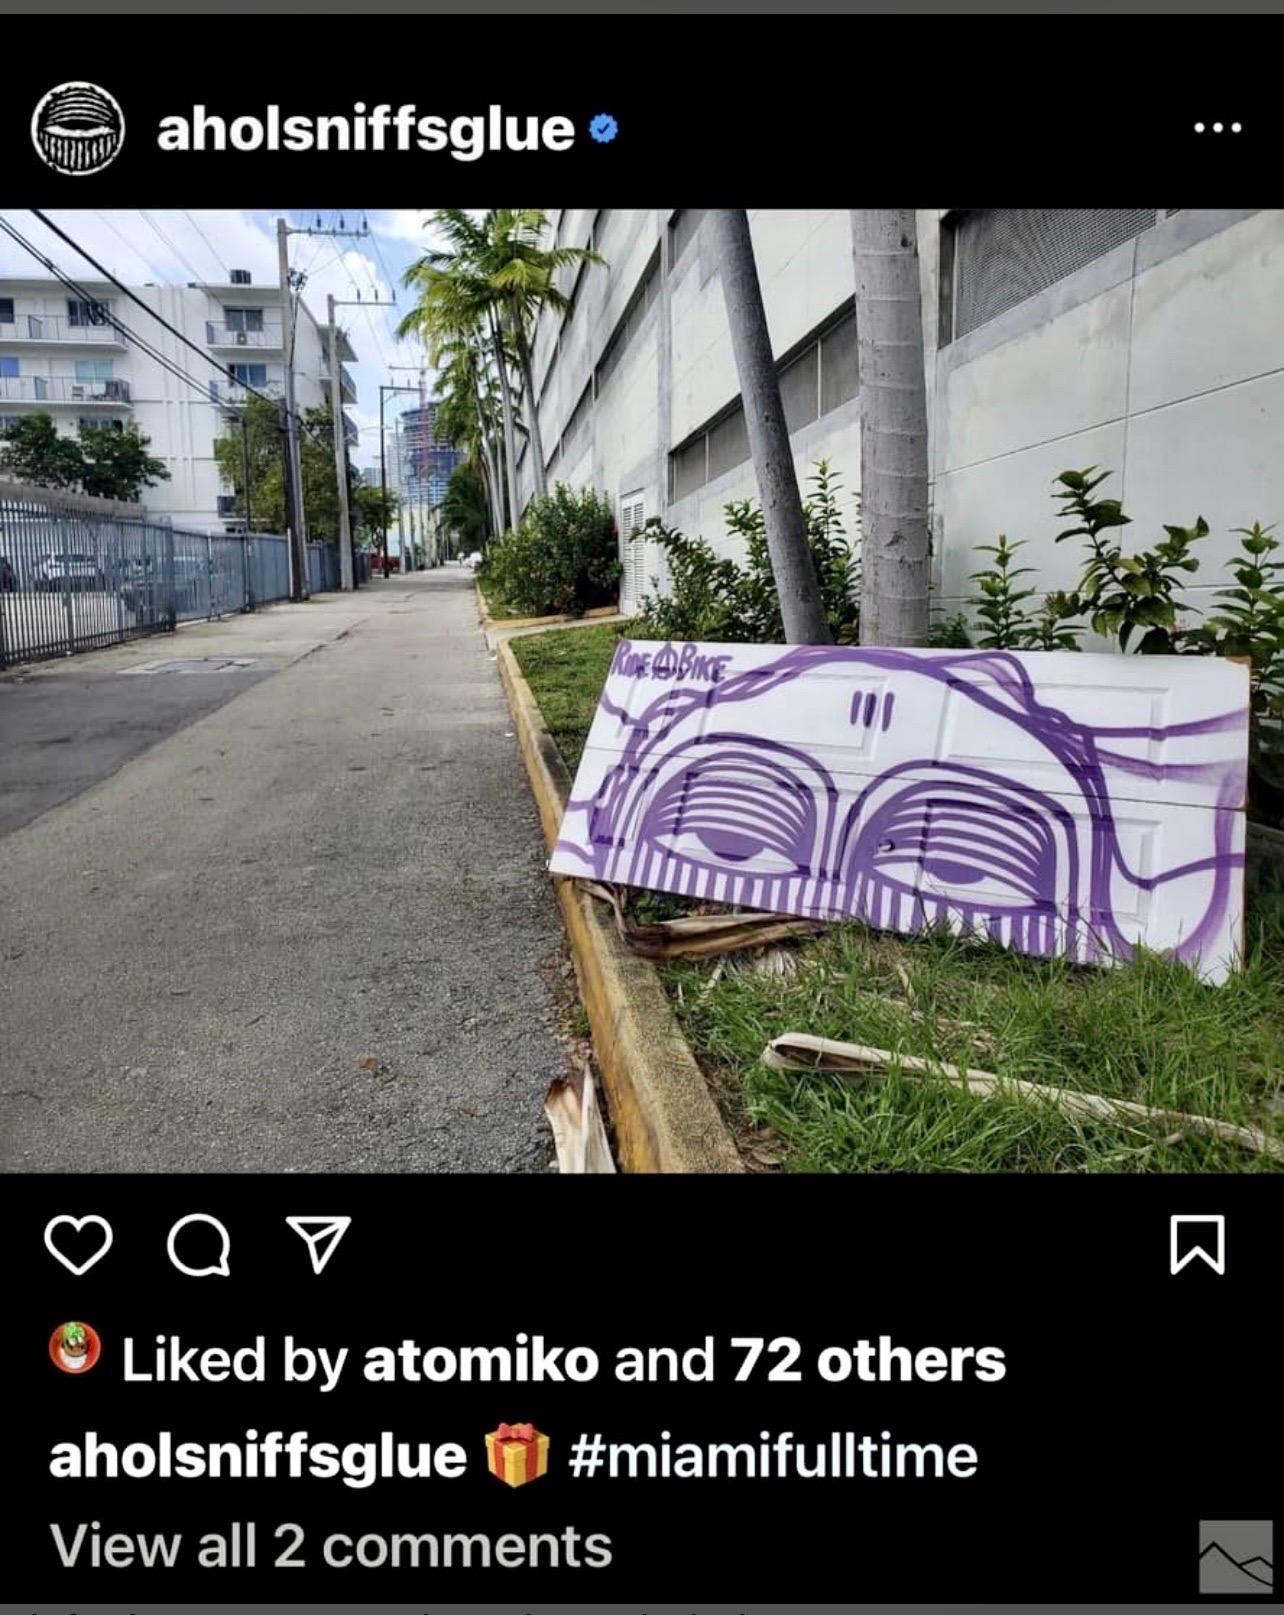 Ahol Sniffs Glue
David Anasagasti (Cuban American, born 1980). 
An original graffiti painting on found object, produced for the artist's 